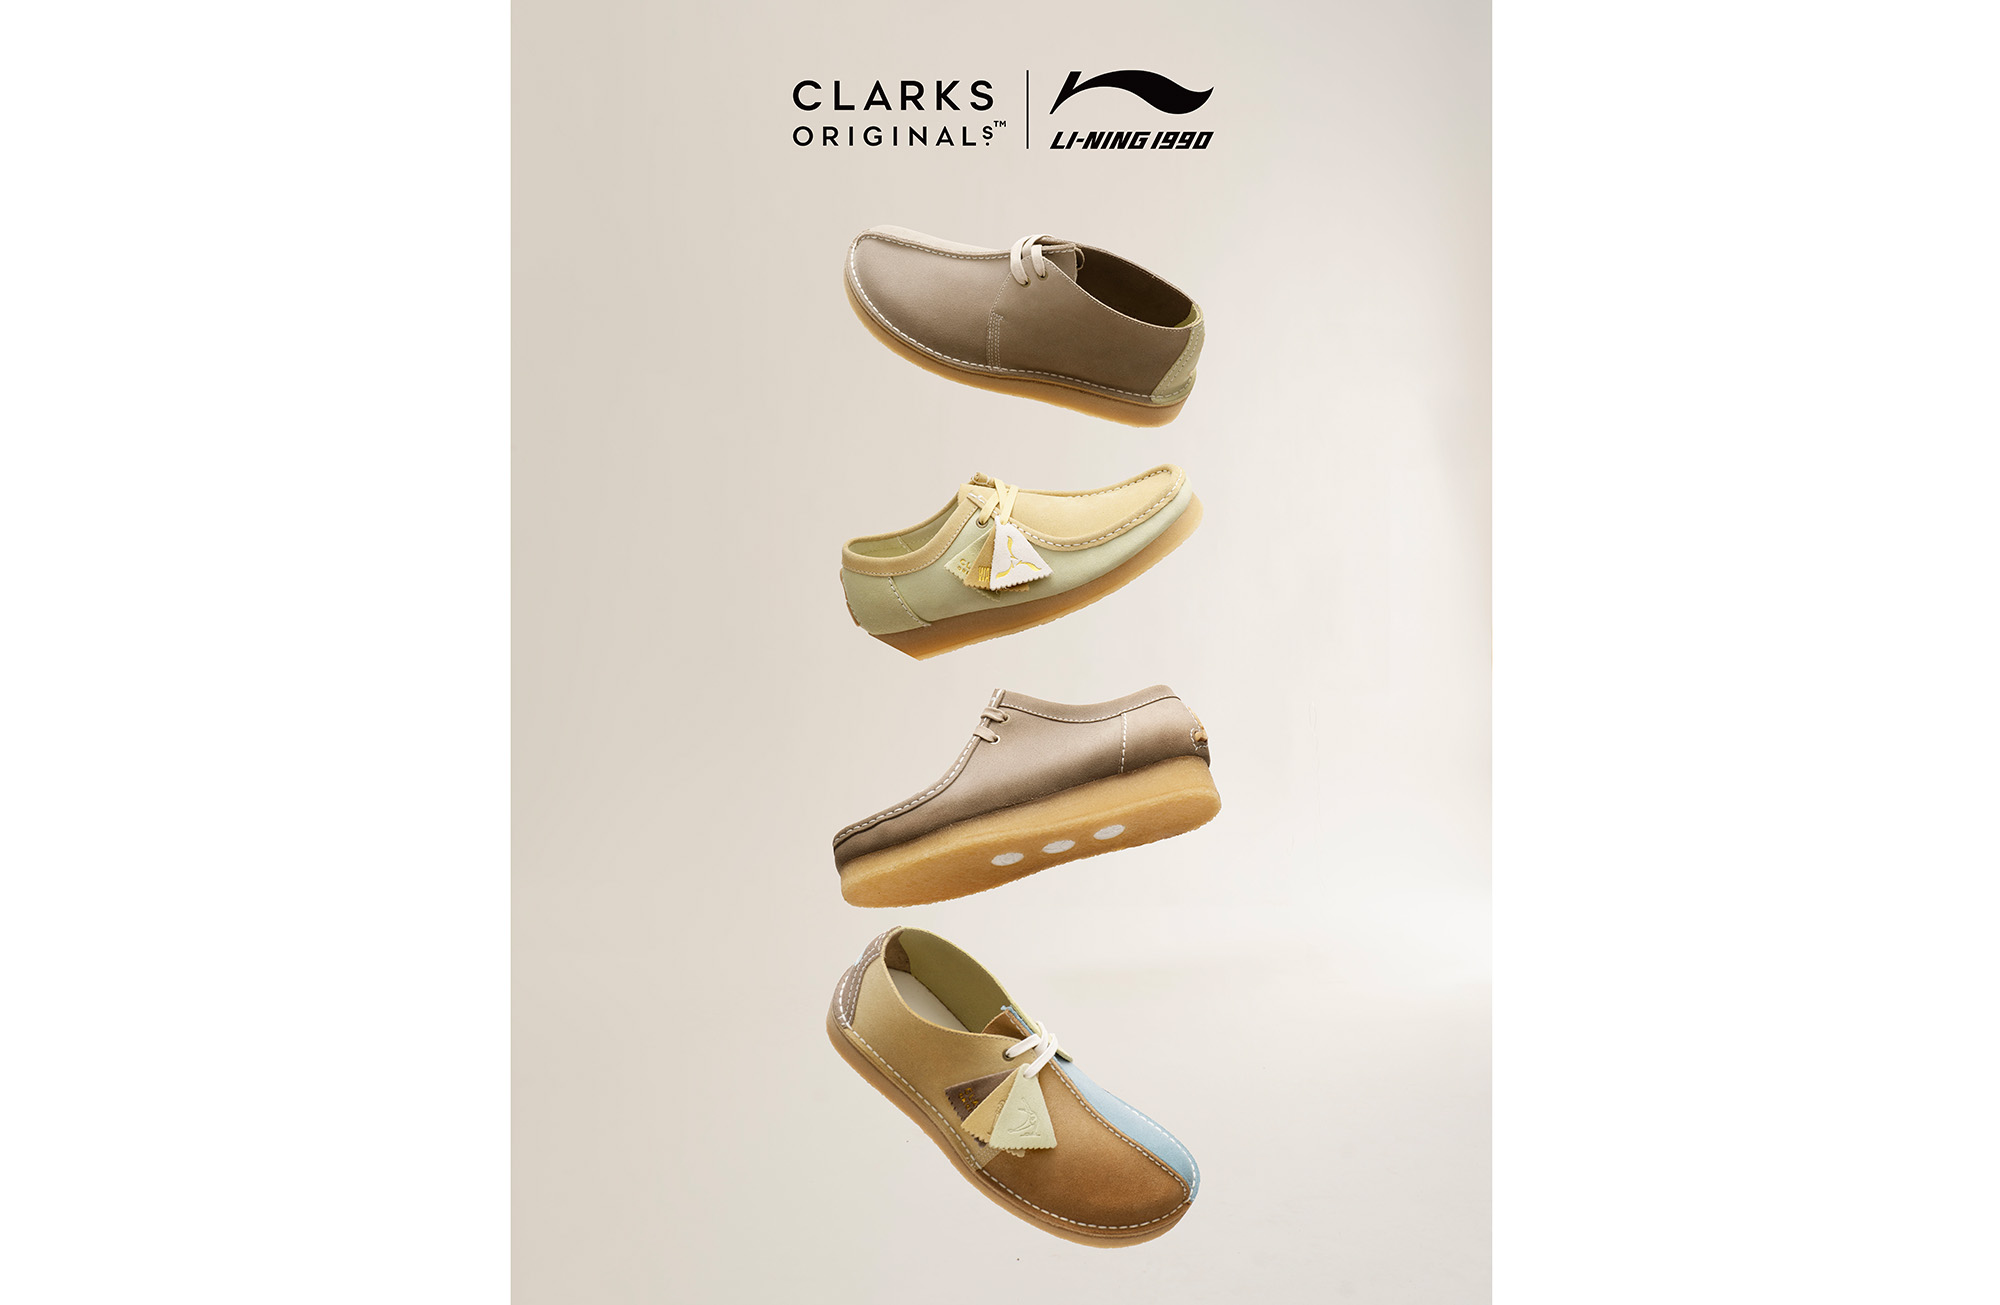 CLARKS ORIGINALS x LI-NING1990 首次重磅发布联名系列鞋款